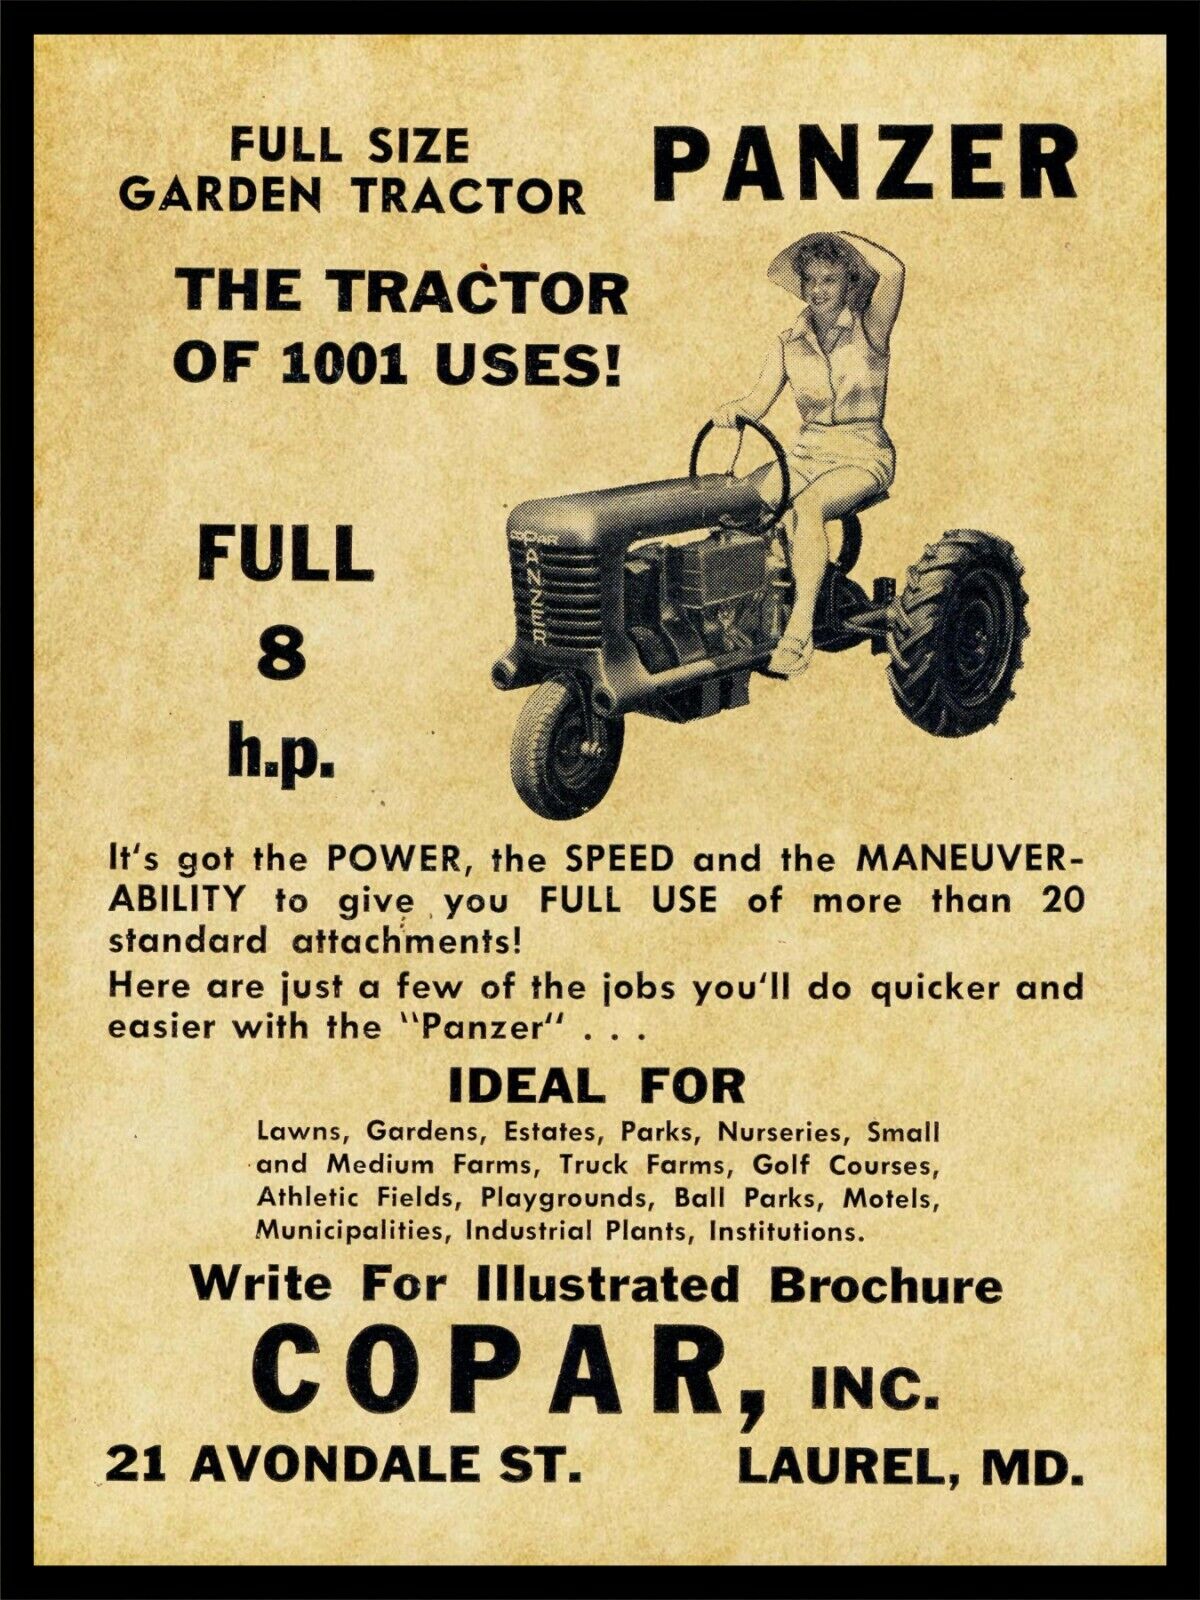 COPAR Panzer Garden Tractor Metal Sign - 24\